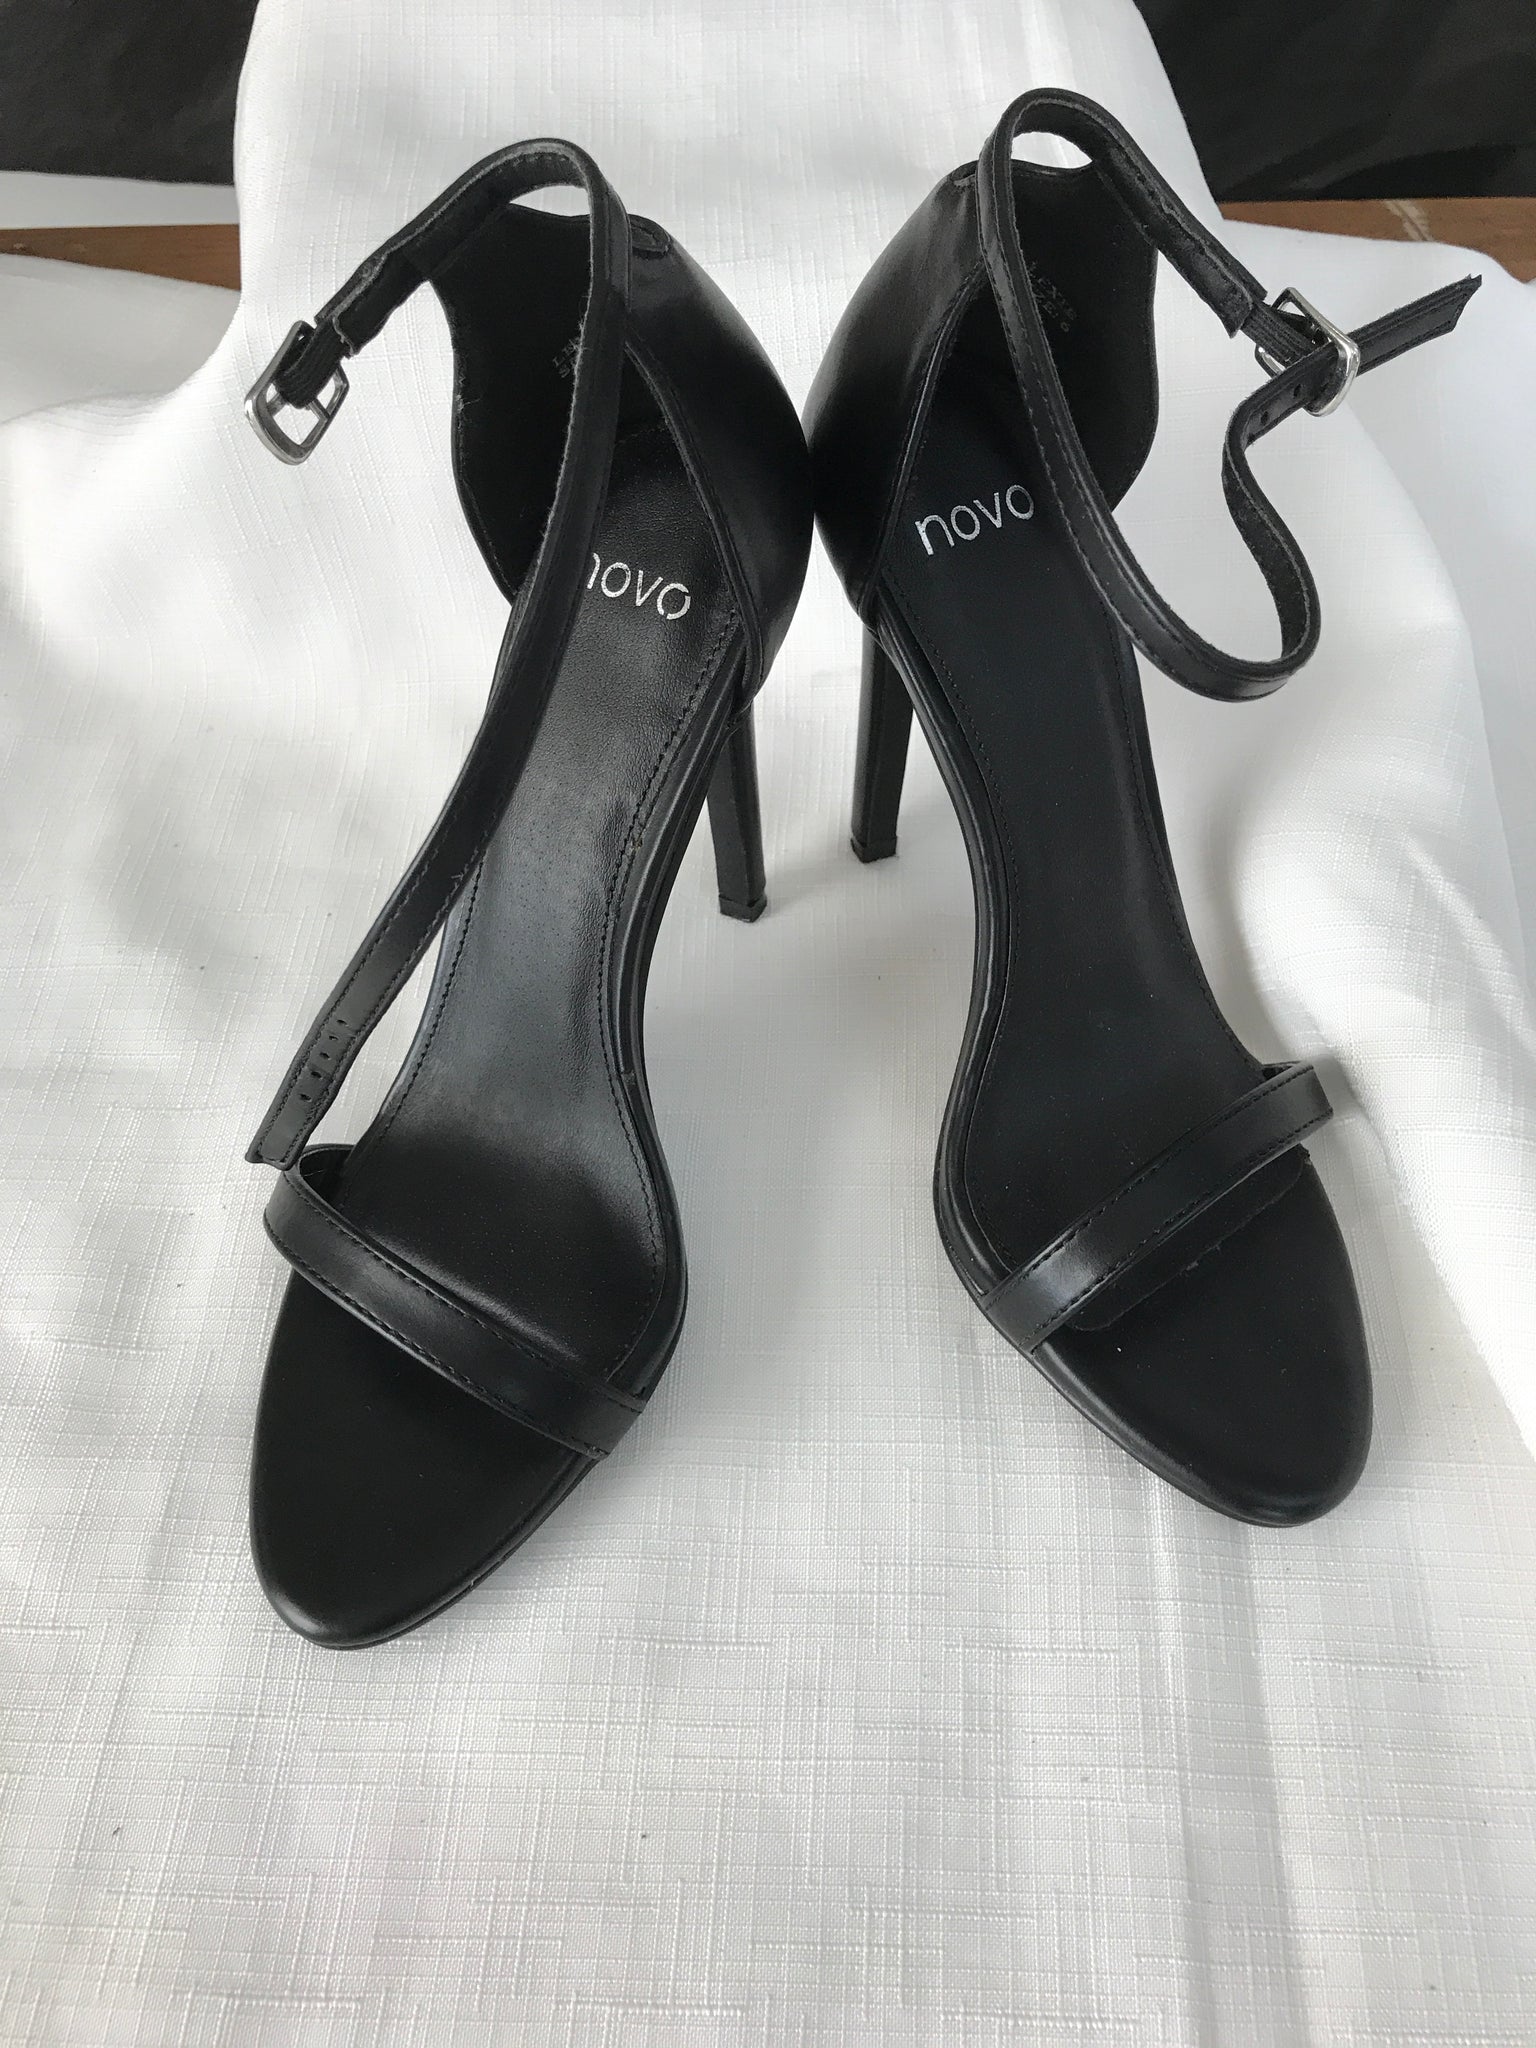 white heels novo